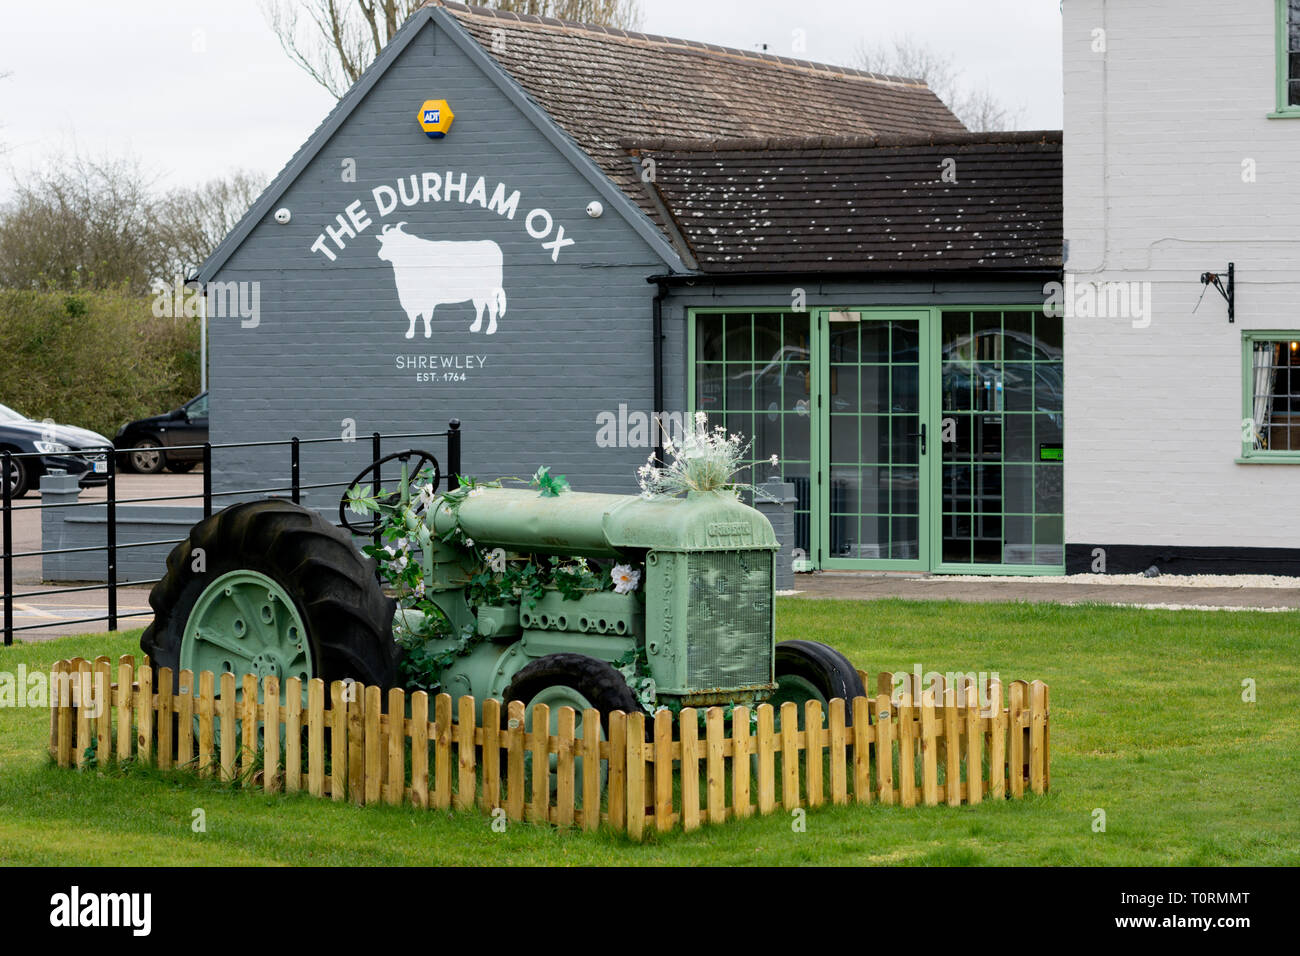 A vintage Fordson tractor displayed outside the Durham Ox pub, Shrewley, Warwickshire, England, UK Stock Photo